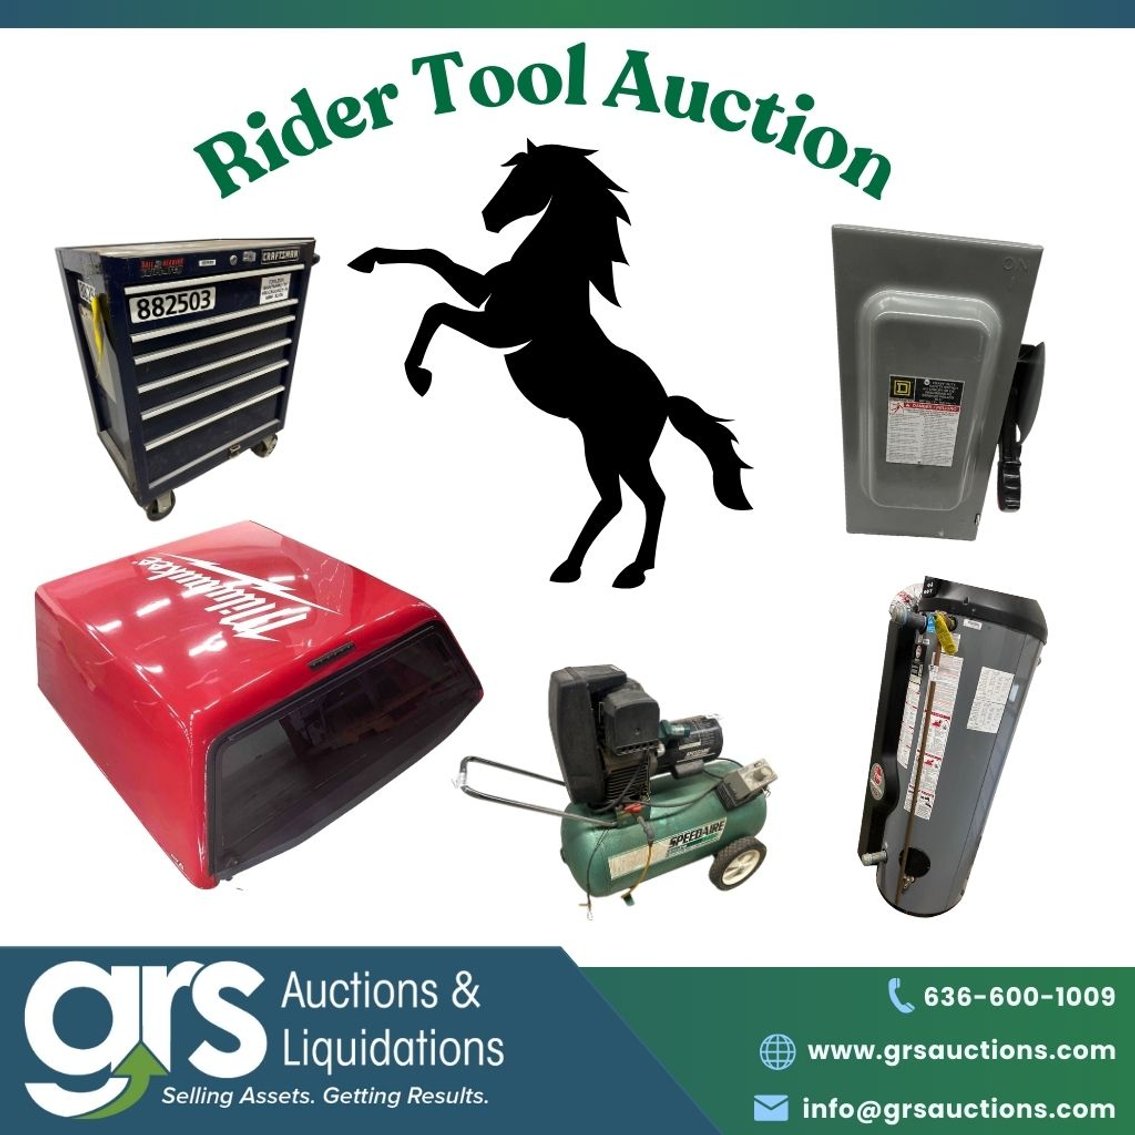 Rider Tool Auction